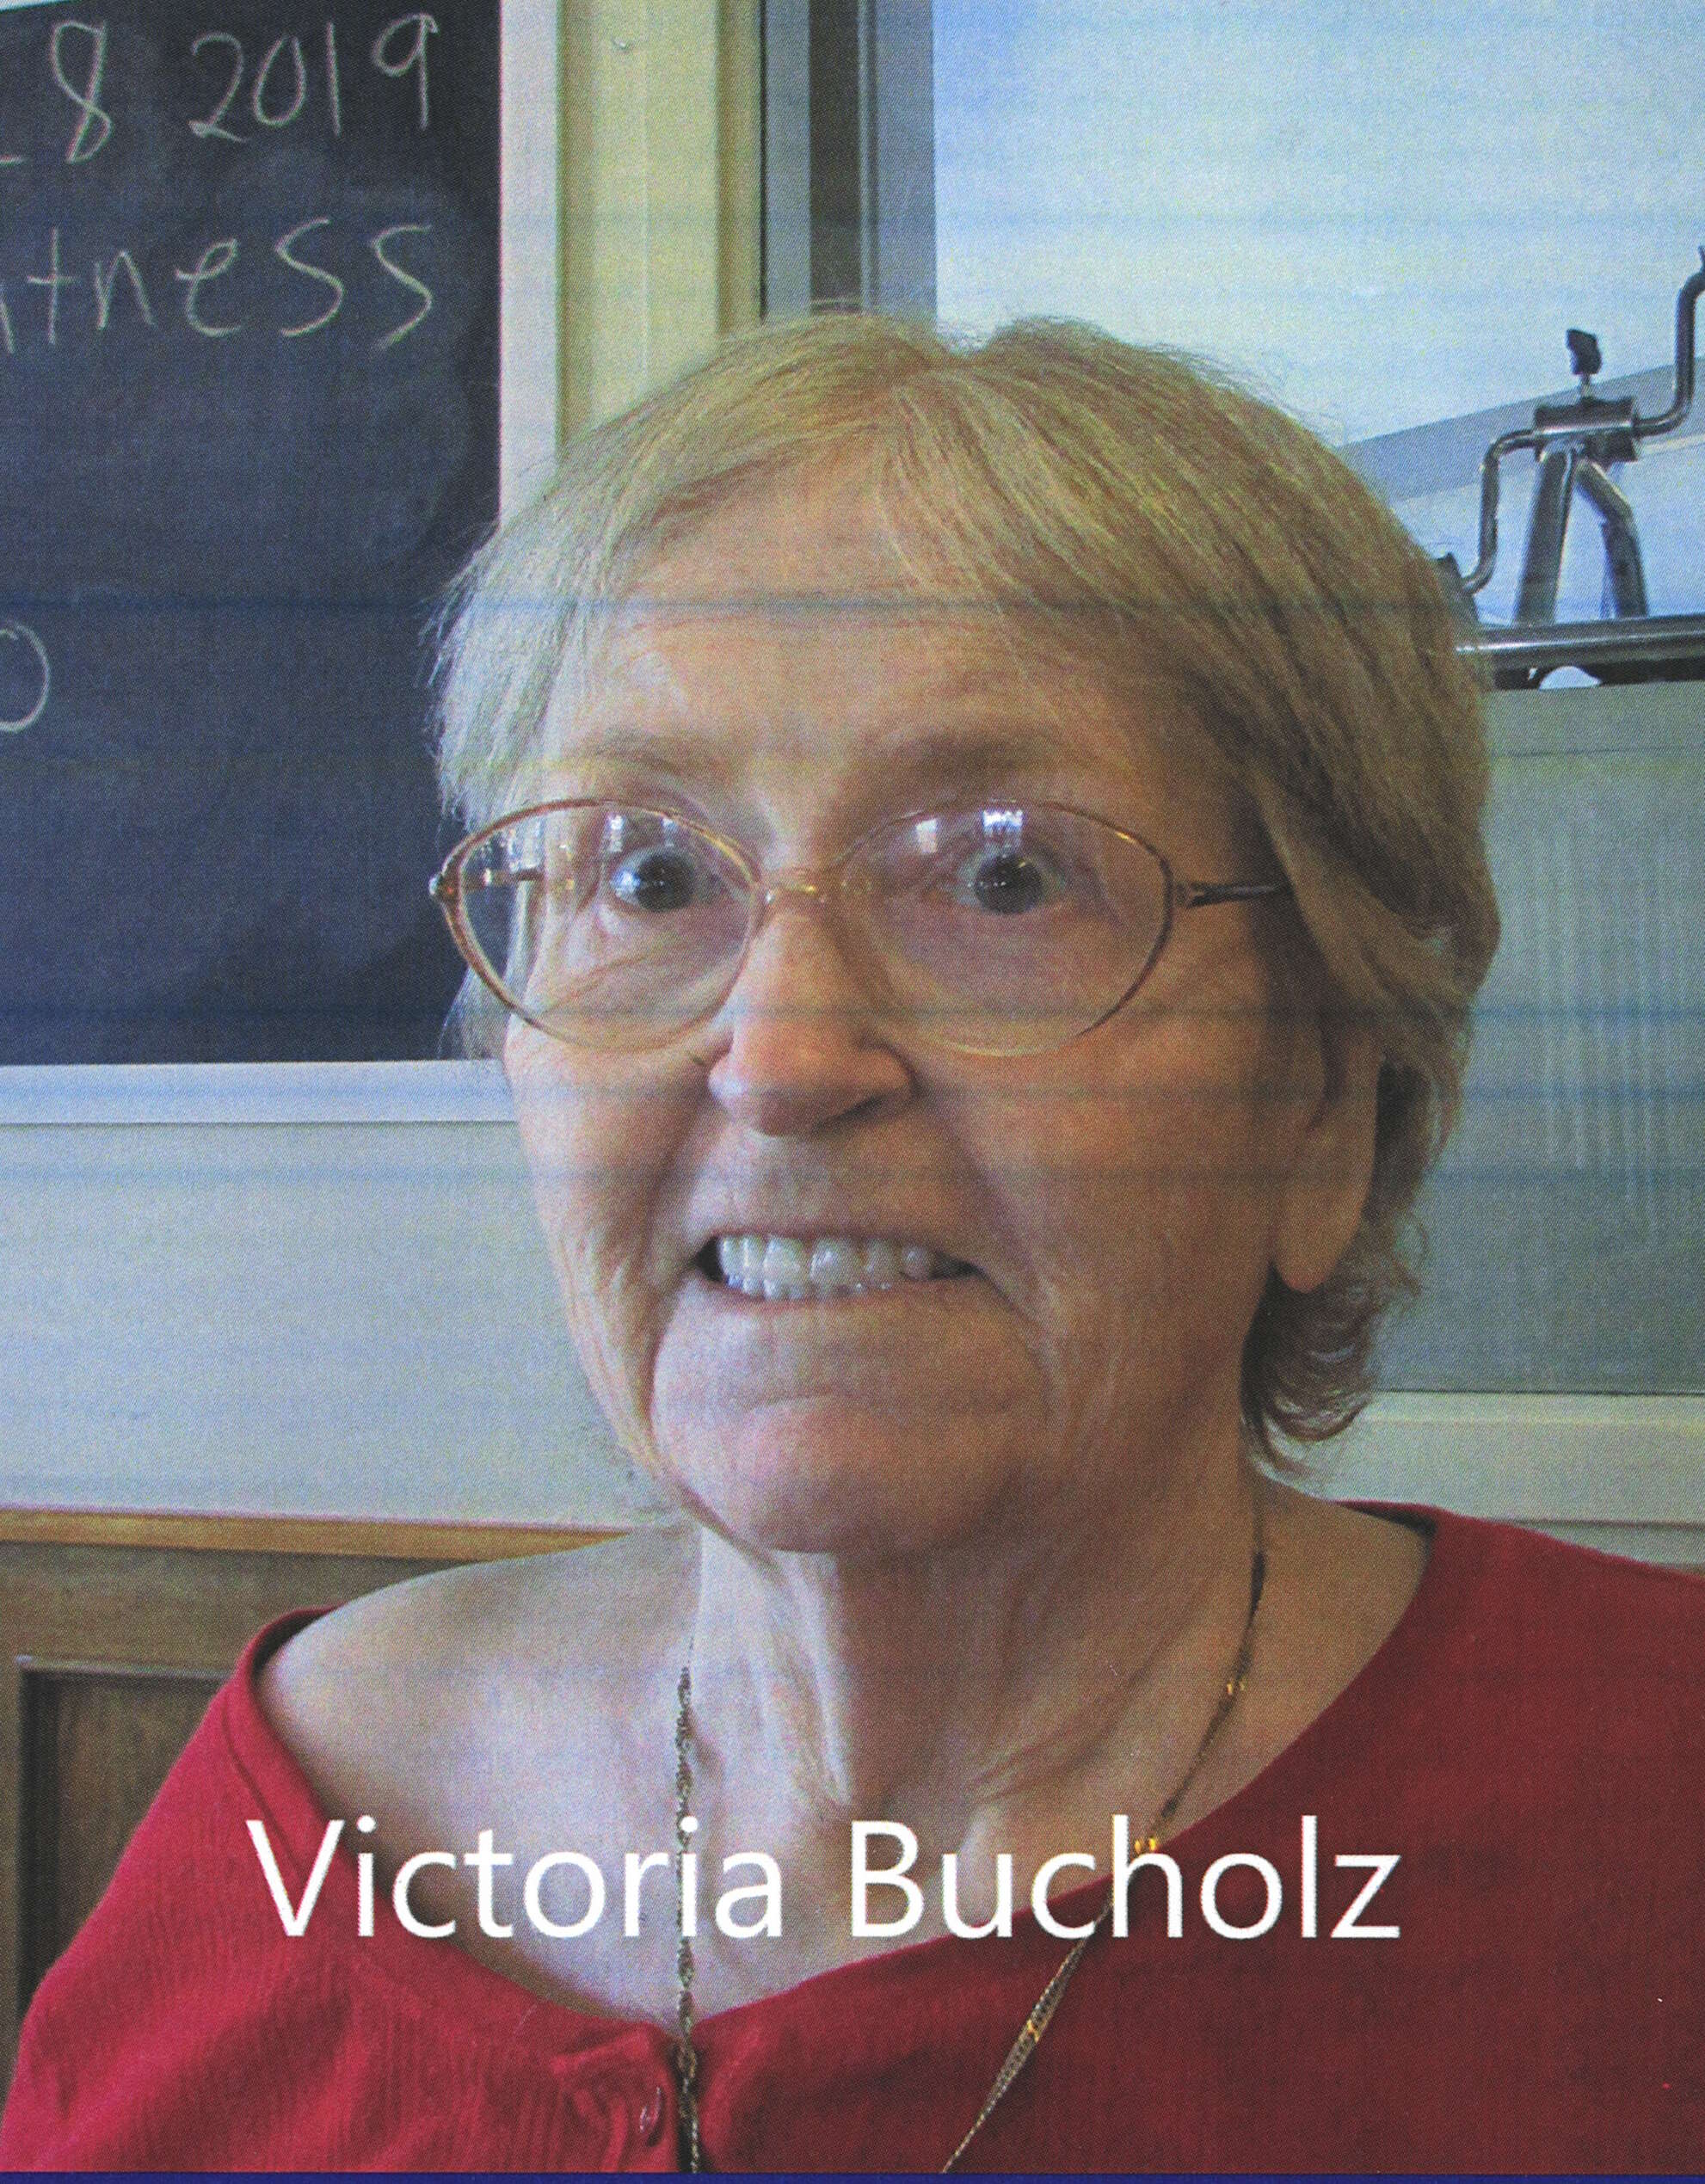 Victoria Rhoda Ruth Bucholz